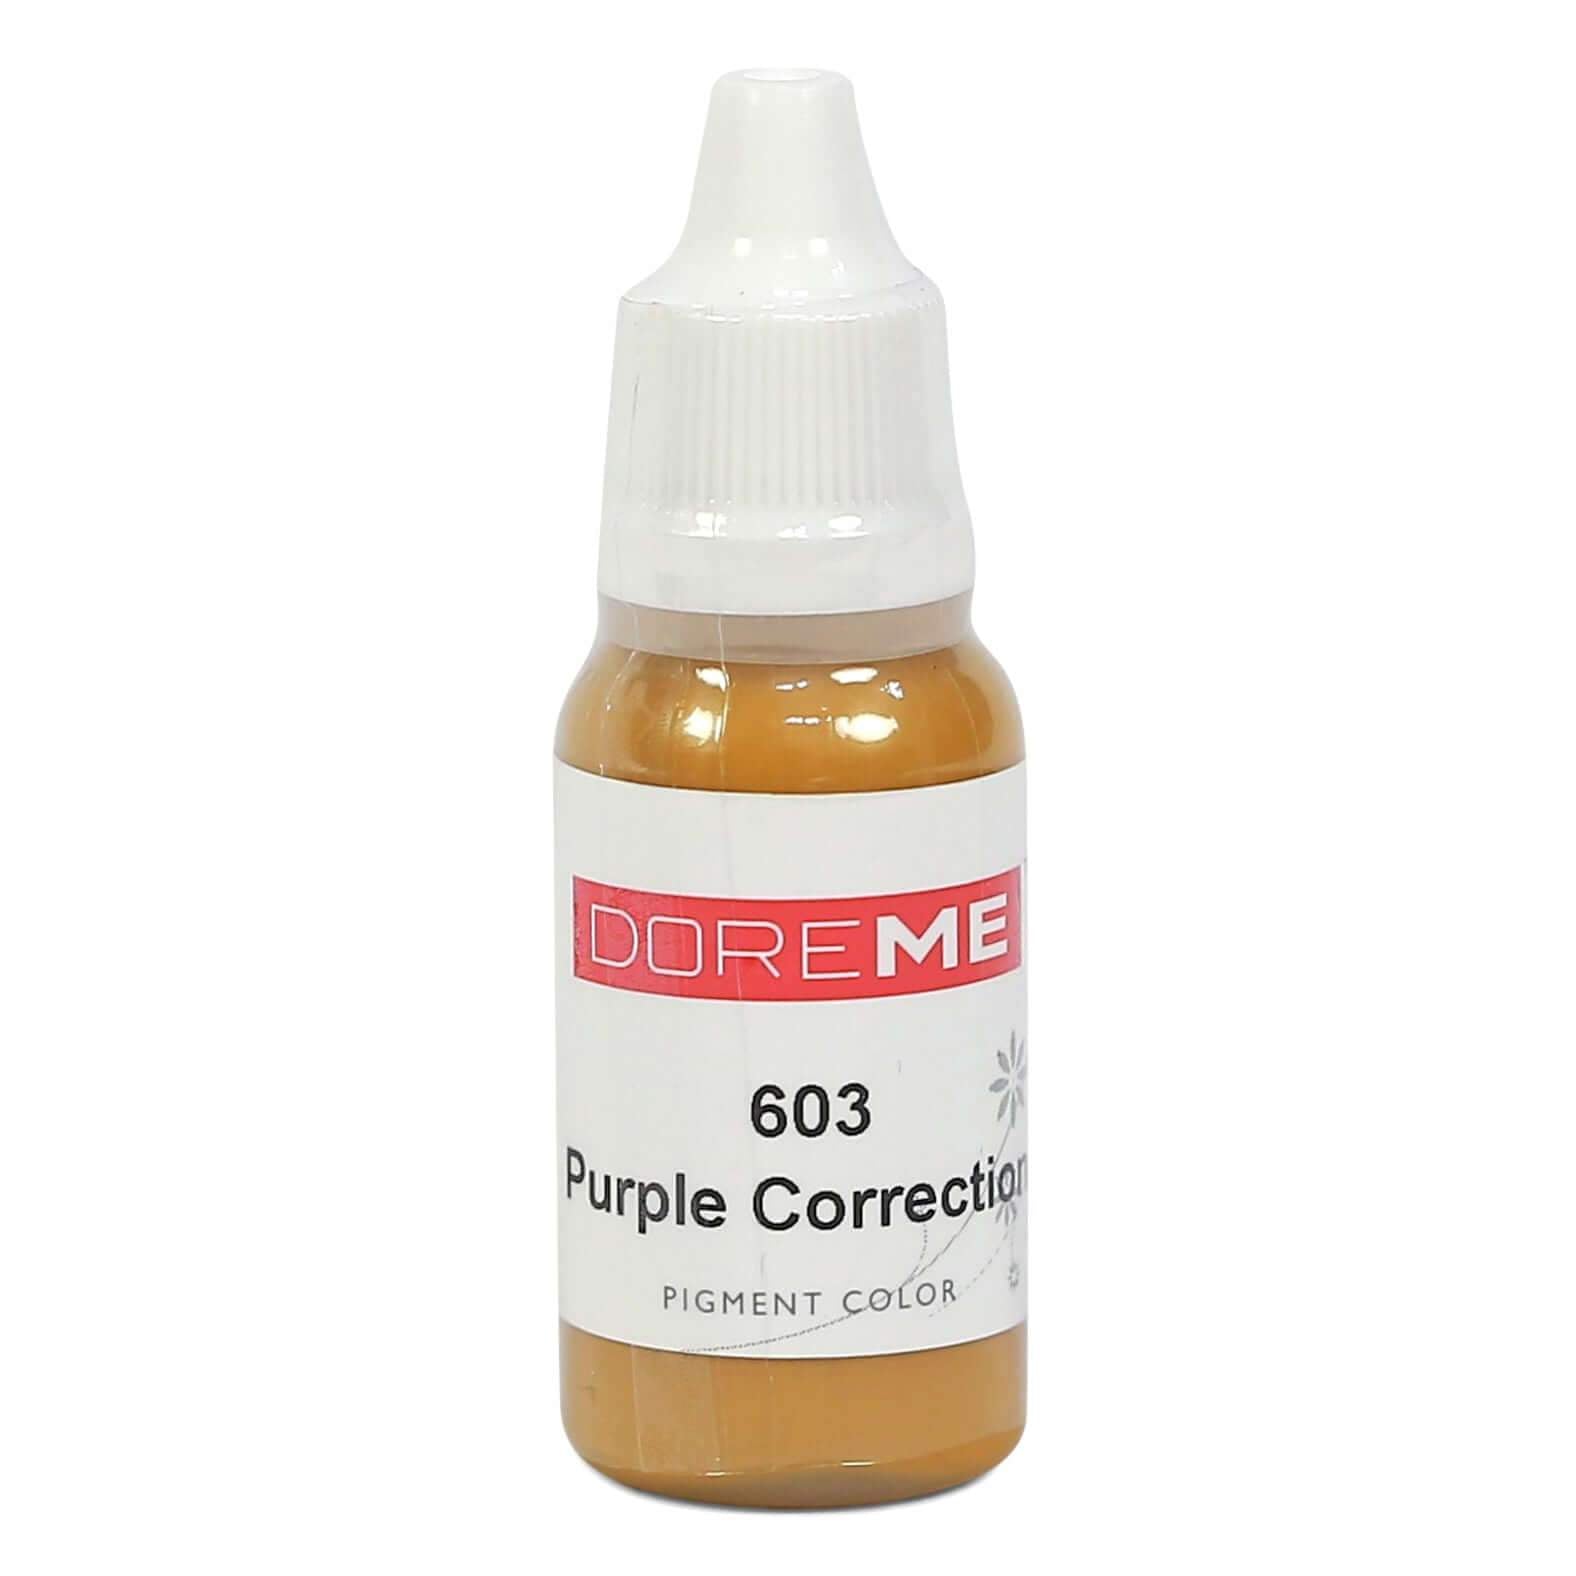 Permanent Makeup pigments Doreme Micropigmentation Correction Colours 603 Purple Correction (w) - Beautiful Ink UK trade and wholesale supplier